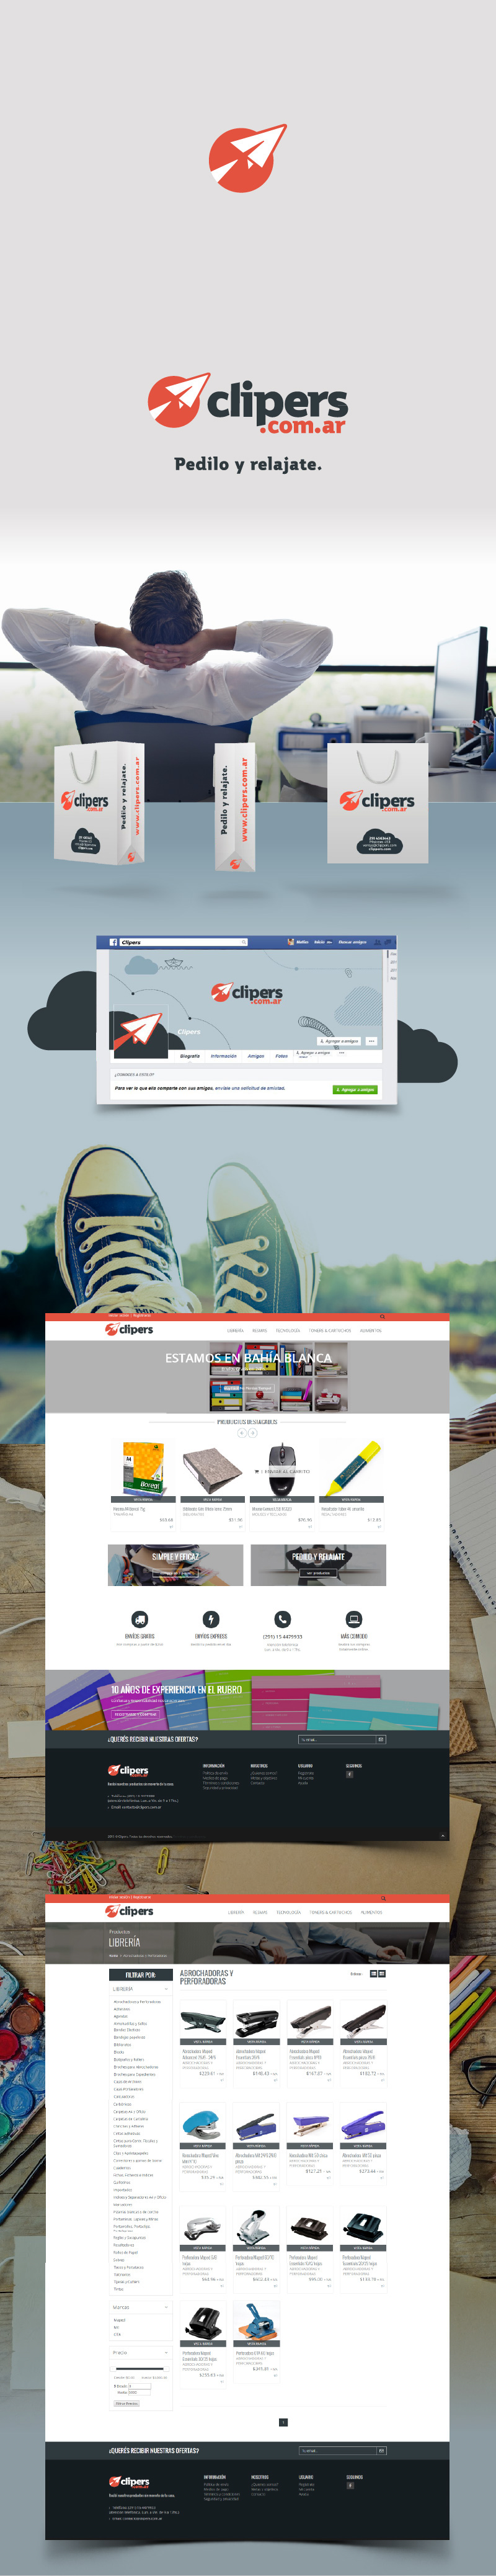 Clipers Office store online Ecommerce Diseño web bahia blanca